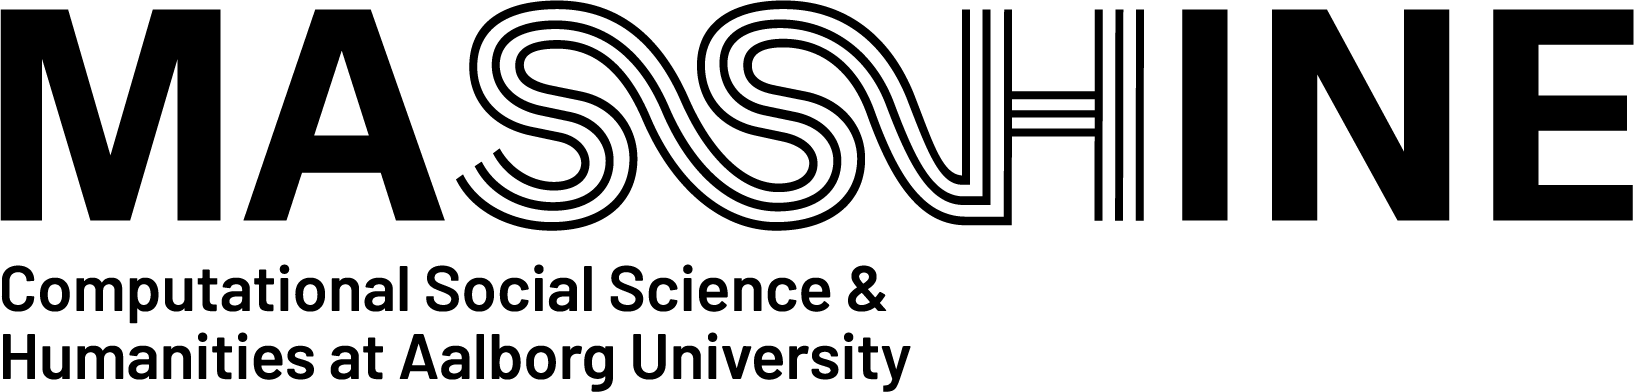 Masshines logo